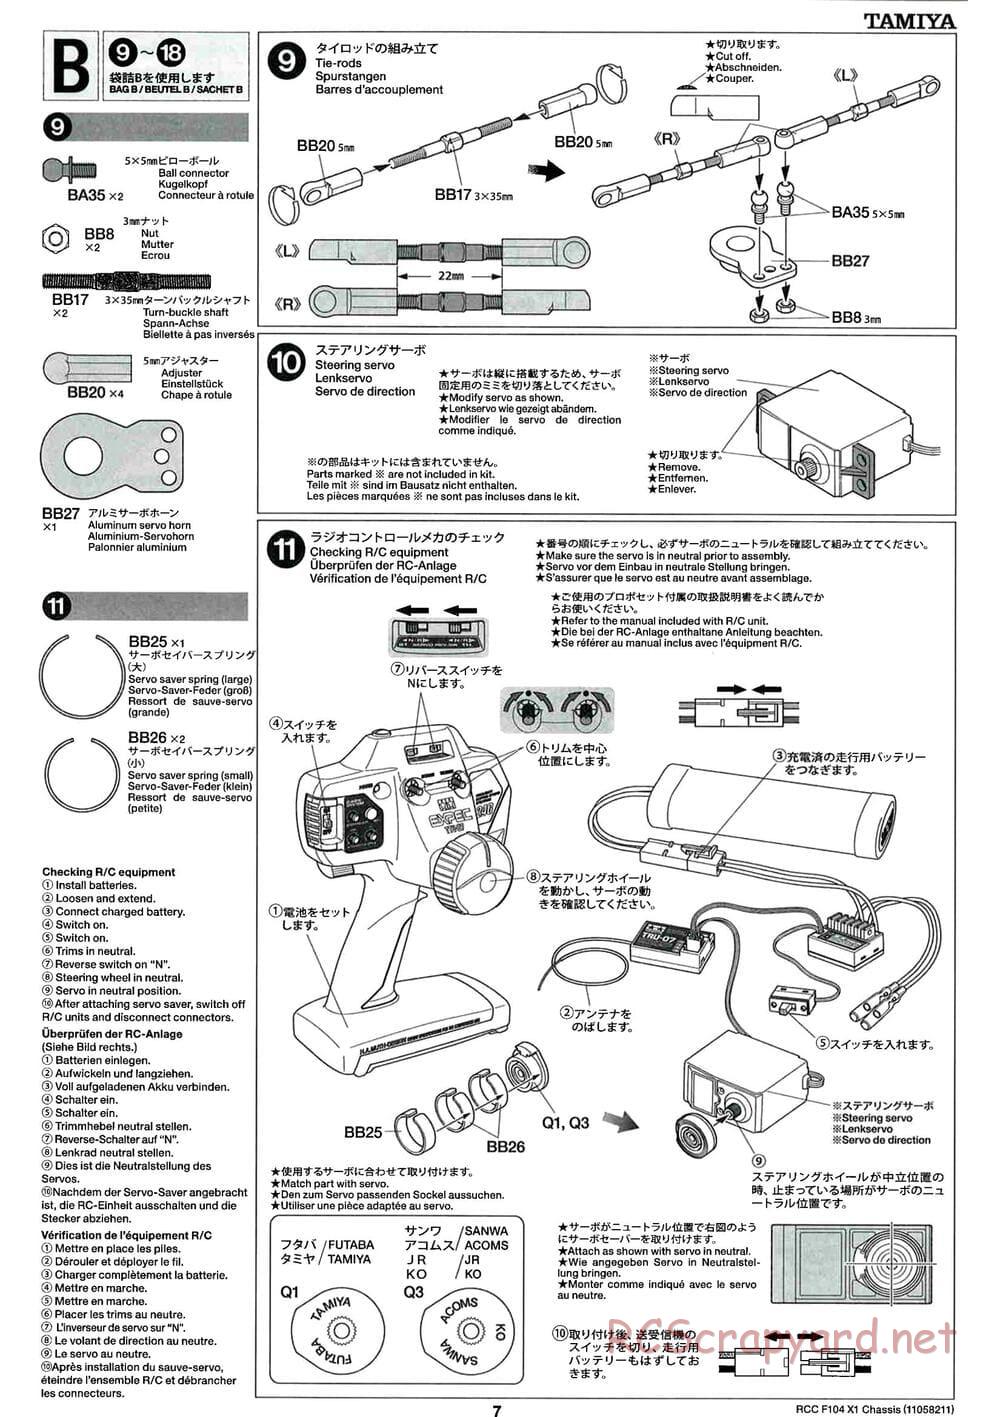 Tamiya - F104X1 Chassis - Manual - Page 7